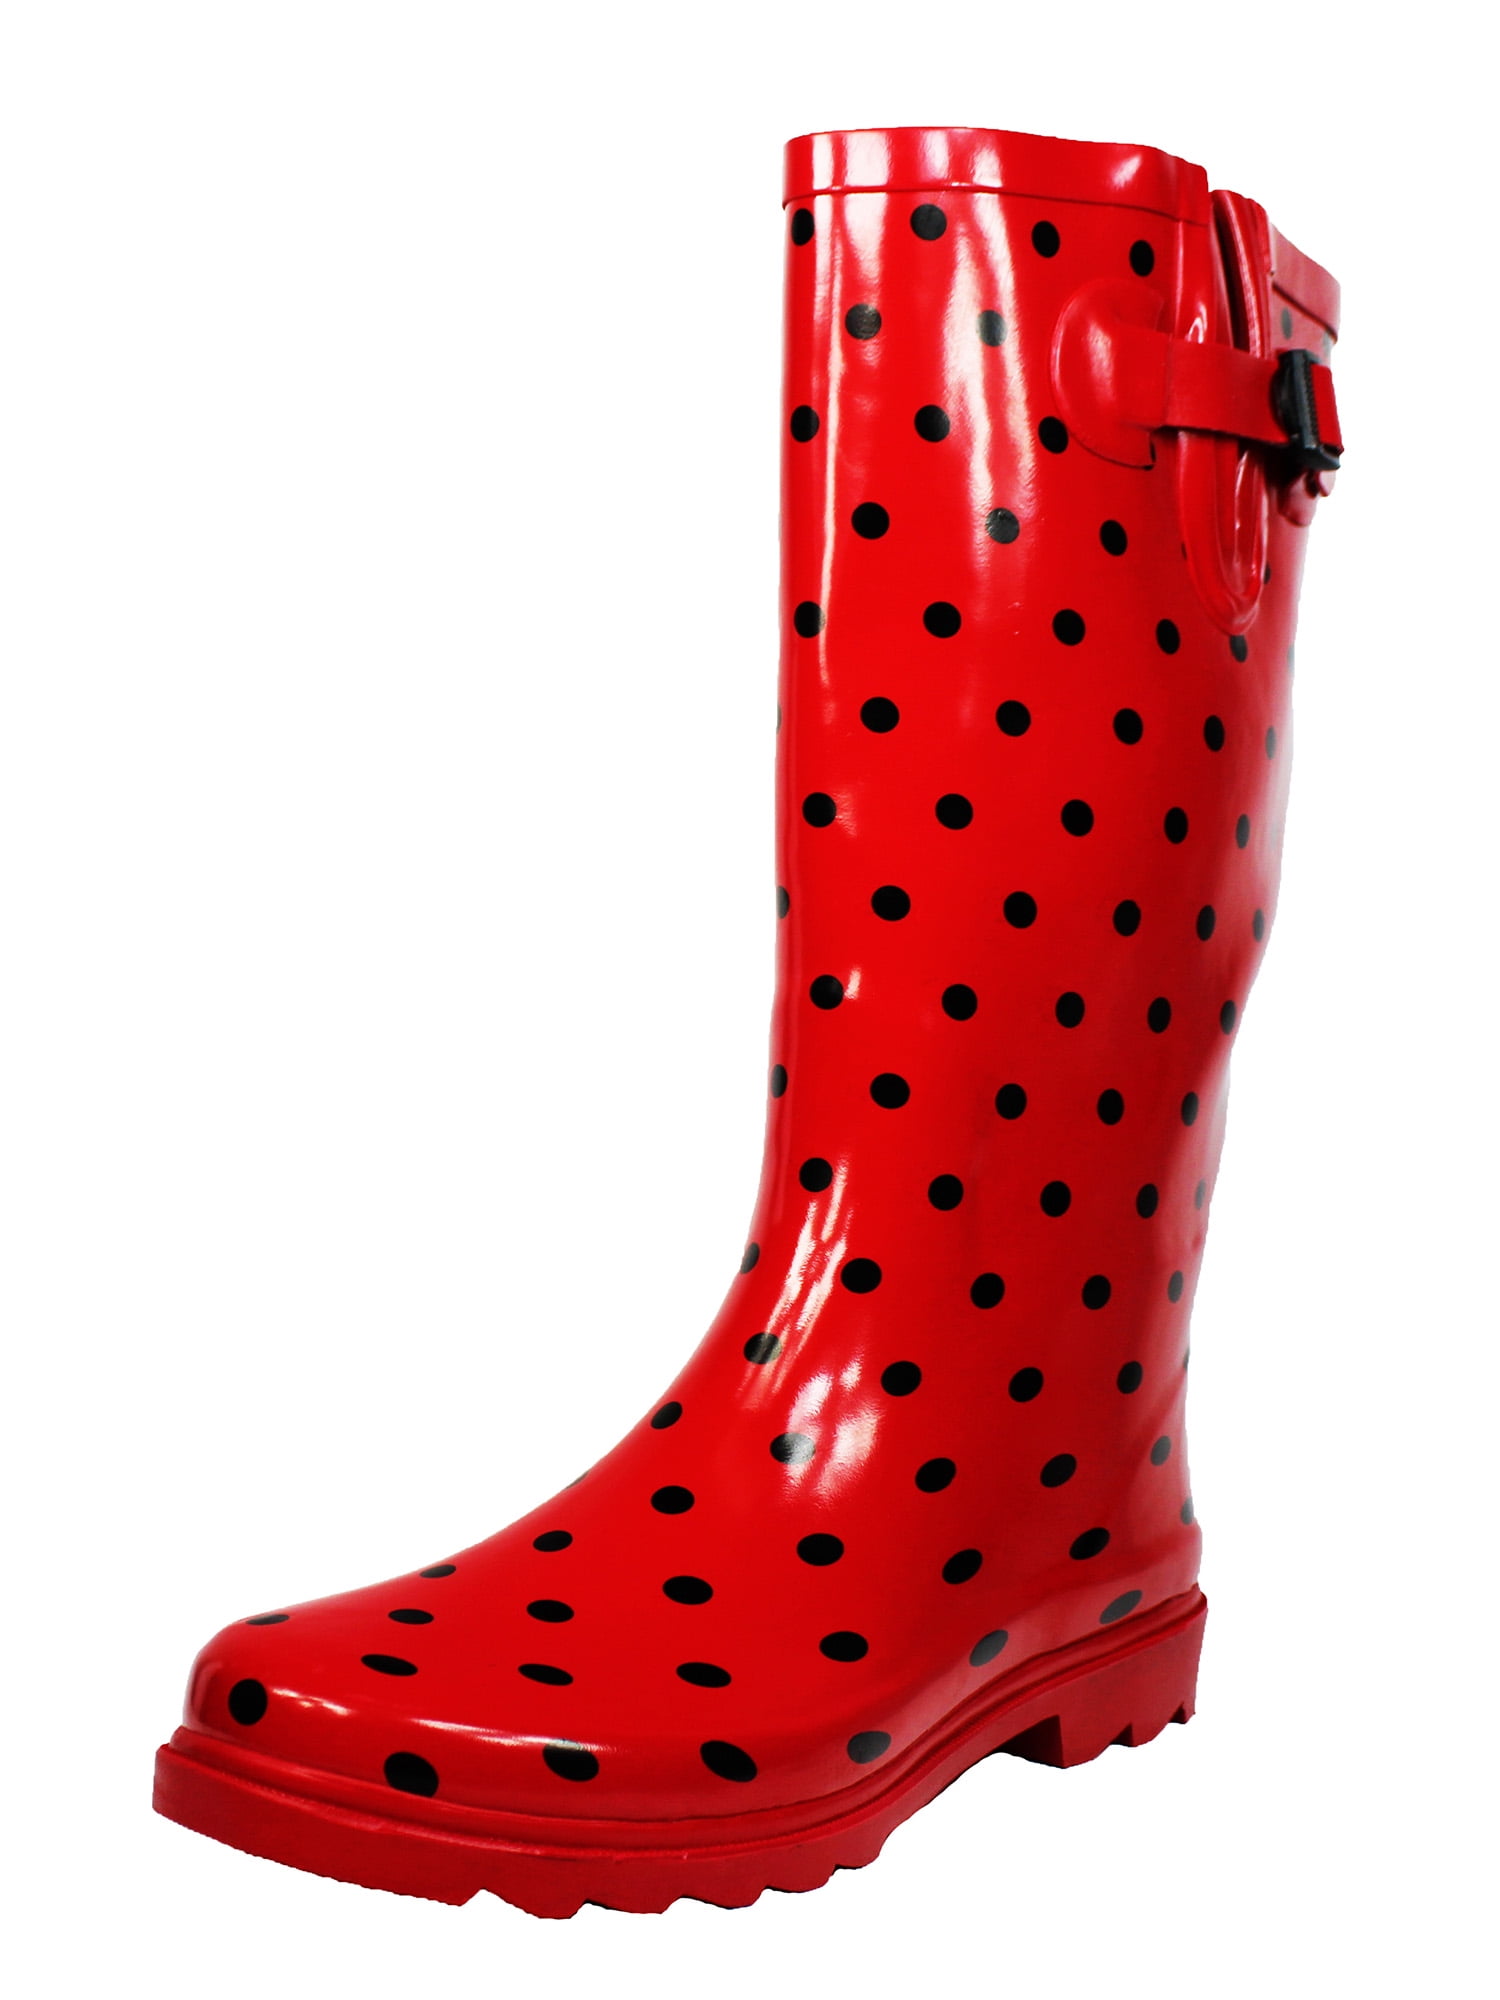 Tanleewa Printed Tall Waterproof Rain Boot for Women Adjustable Rubber Shoe Size 10 Adult Female